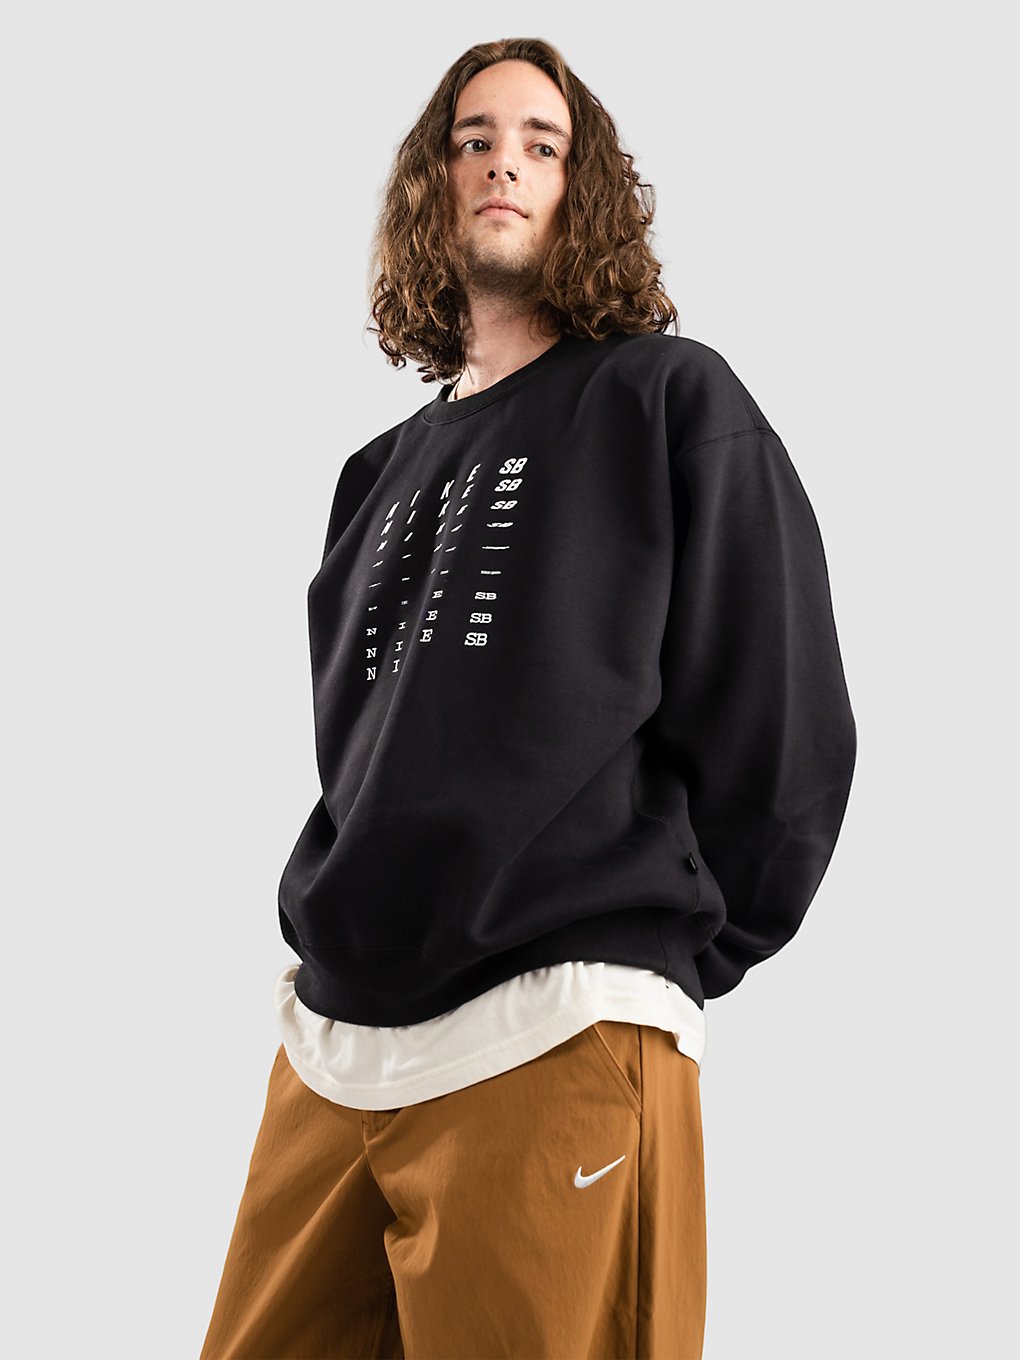 Nike Fade Gfx Crew Sweater black kaufen